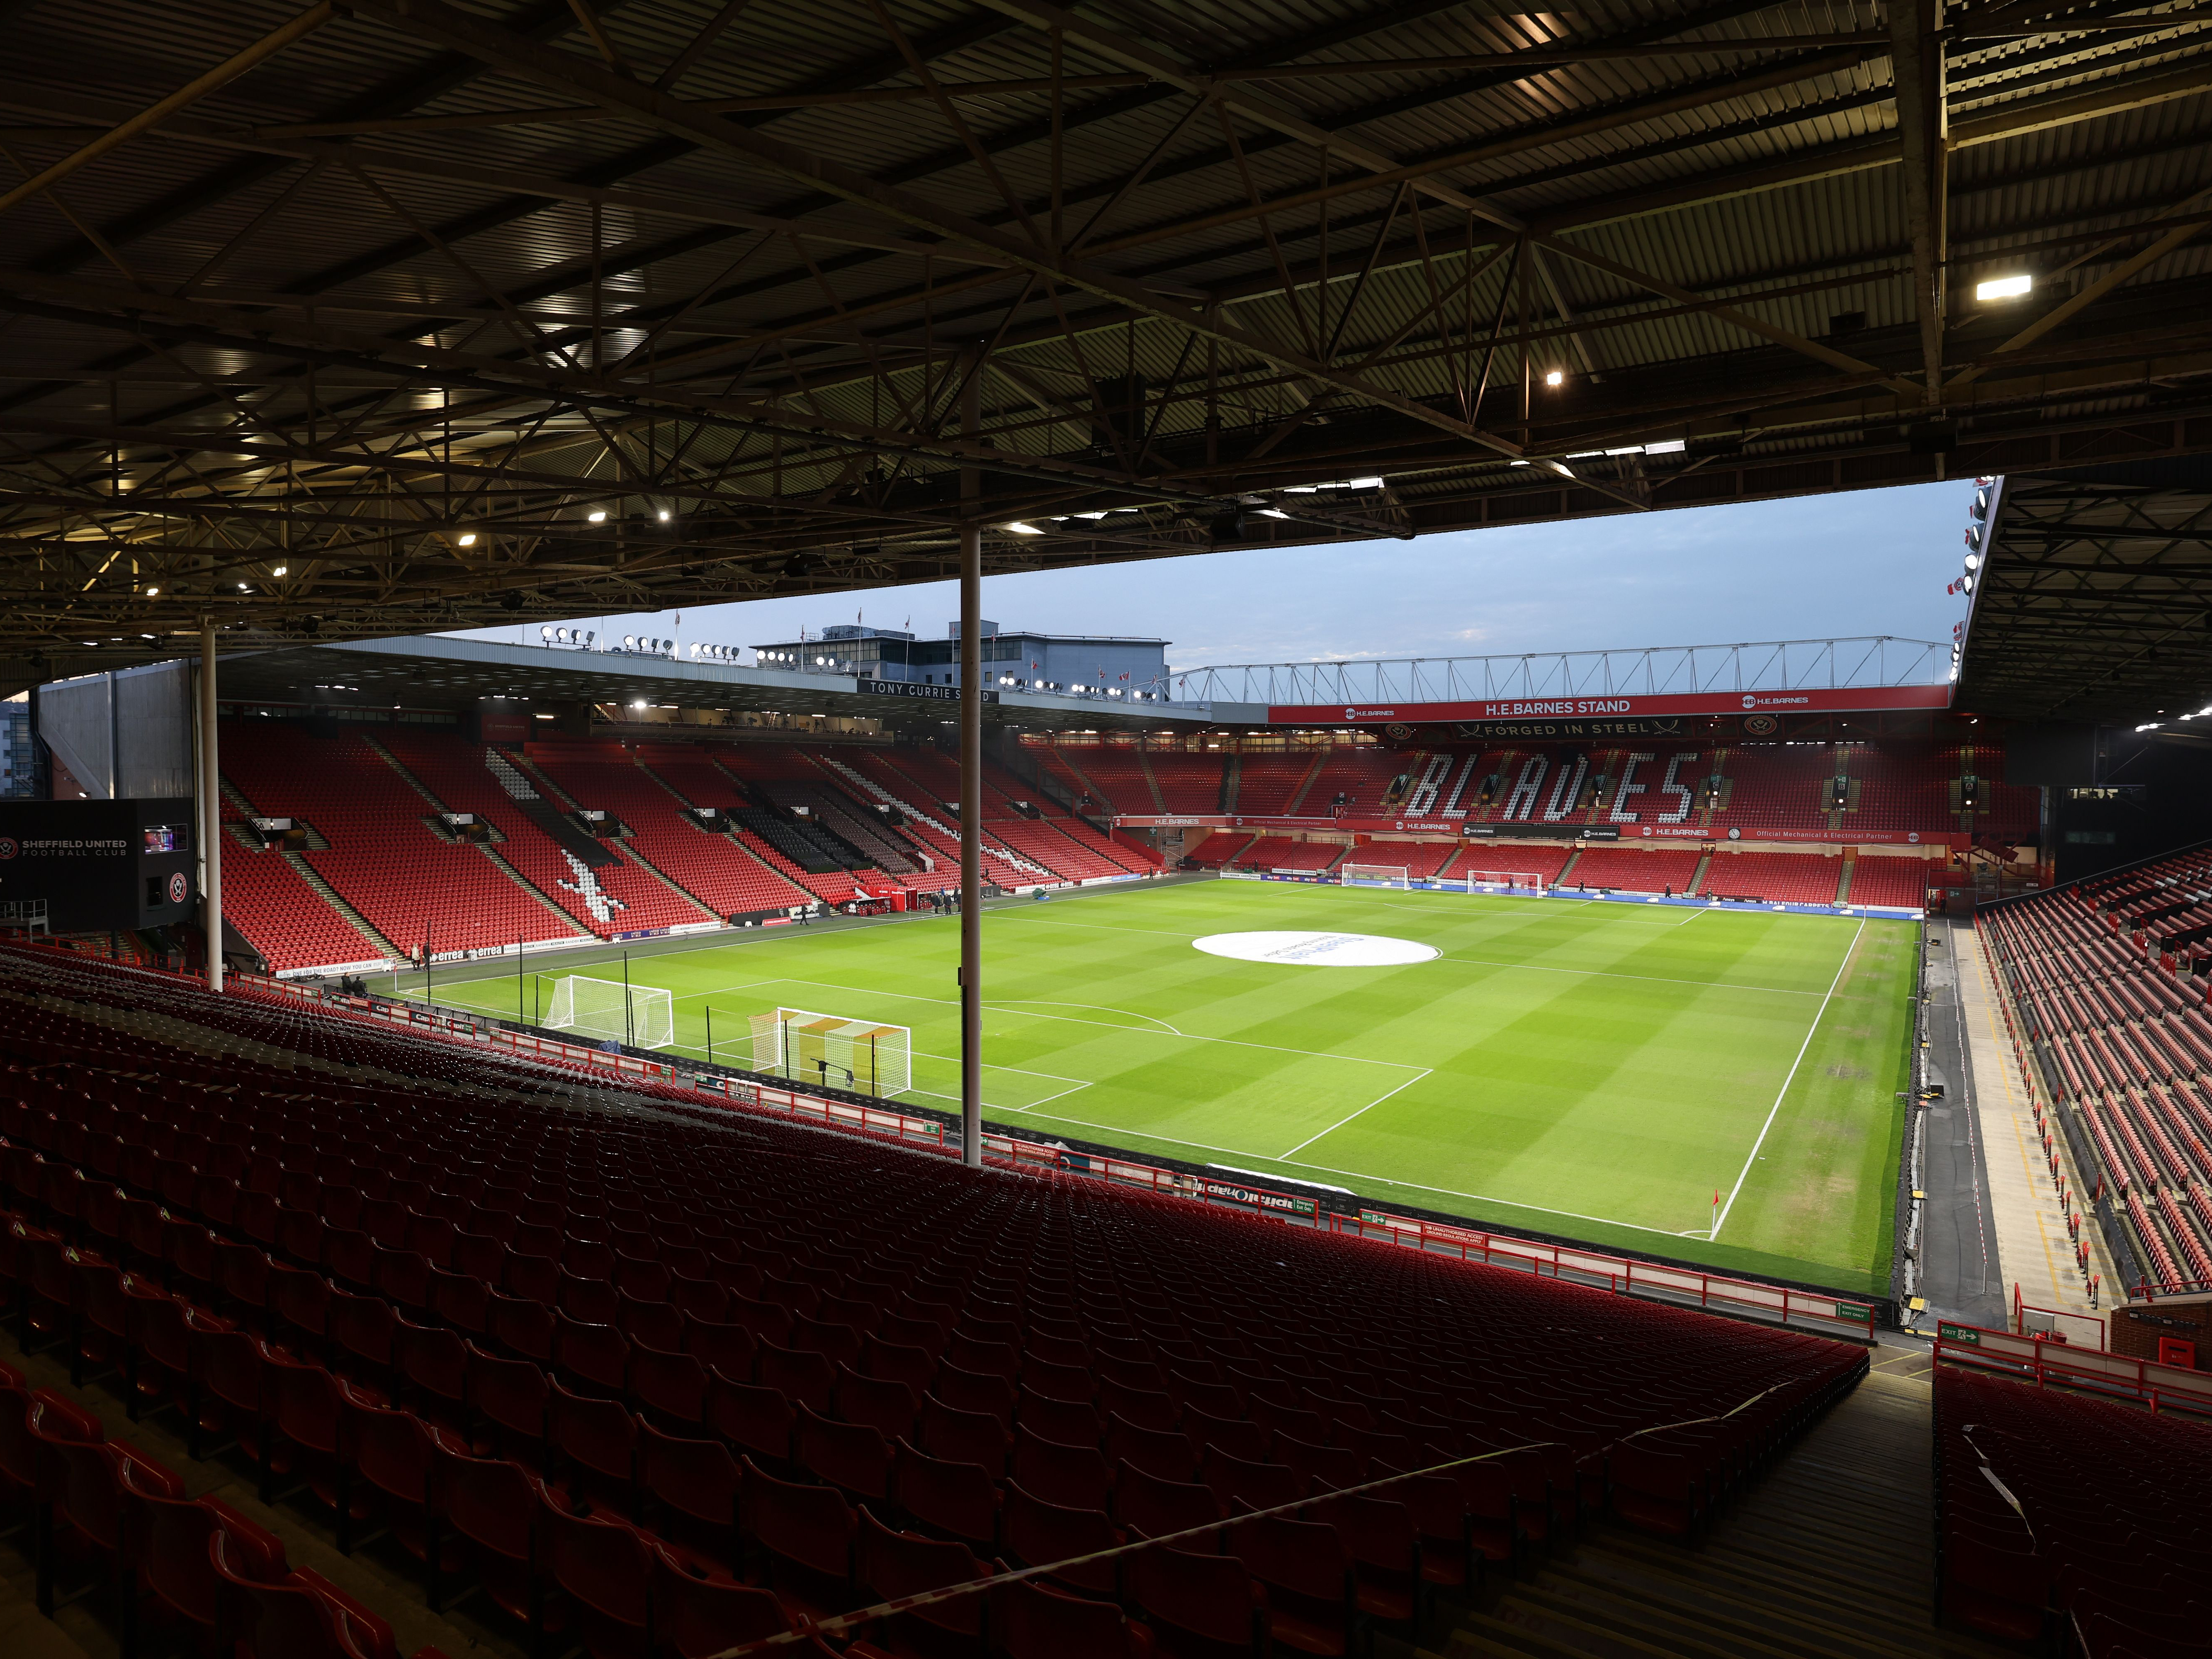 An image of Sheffield United's Bramall Lane Stadium